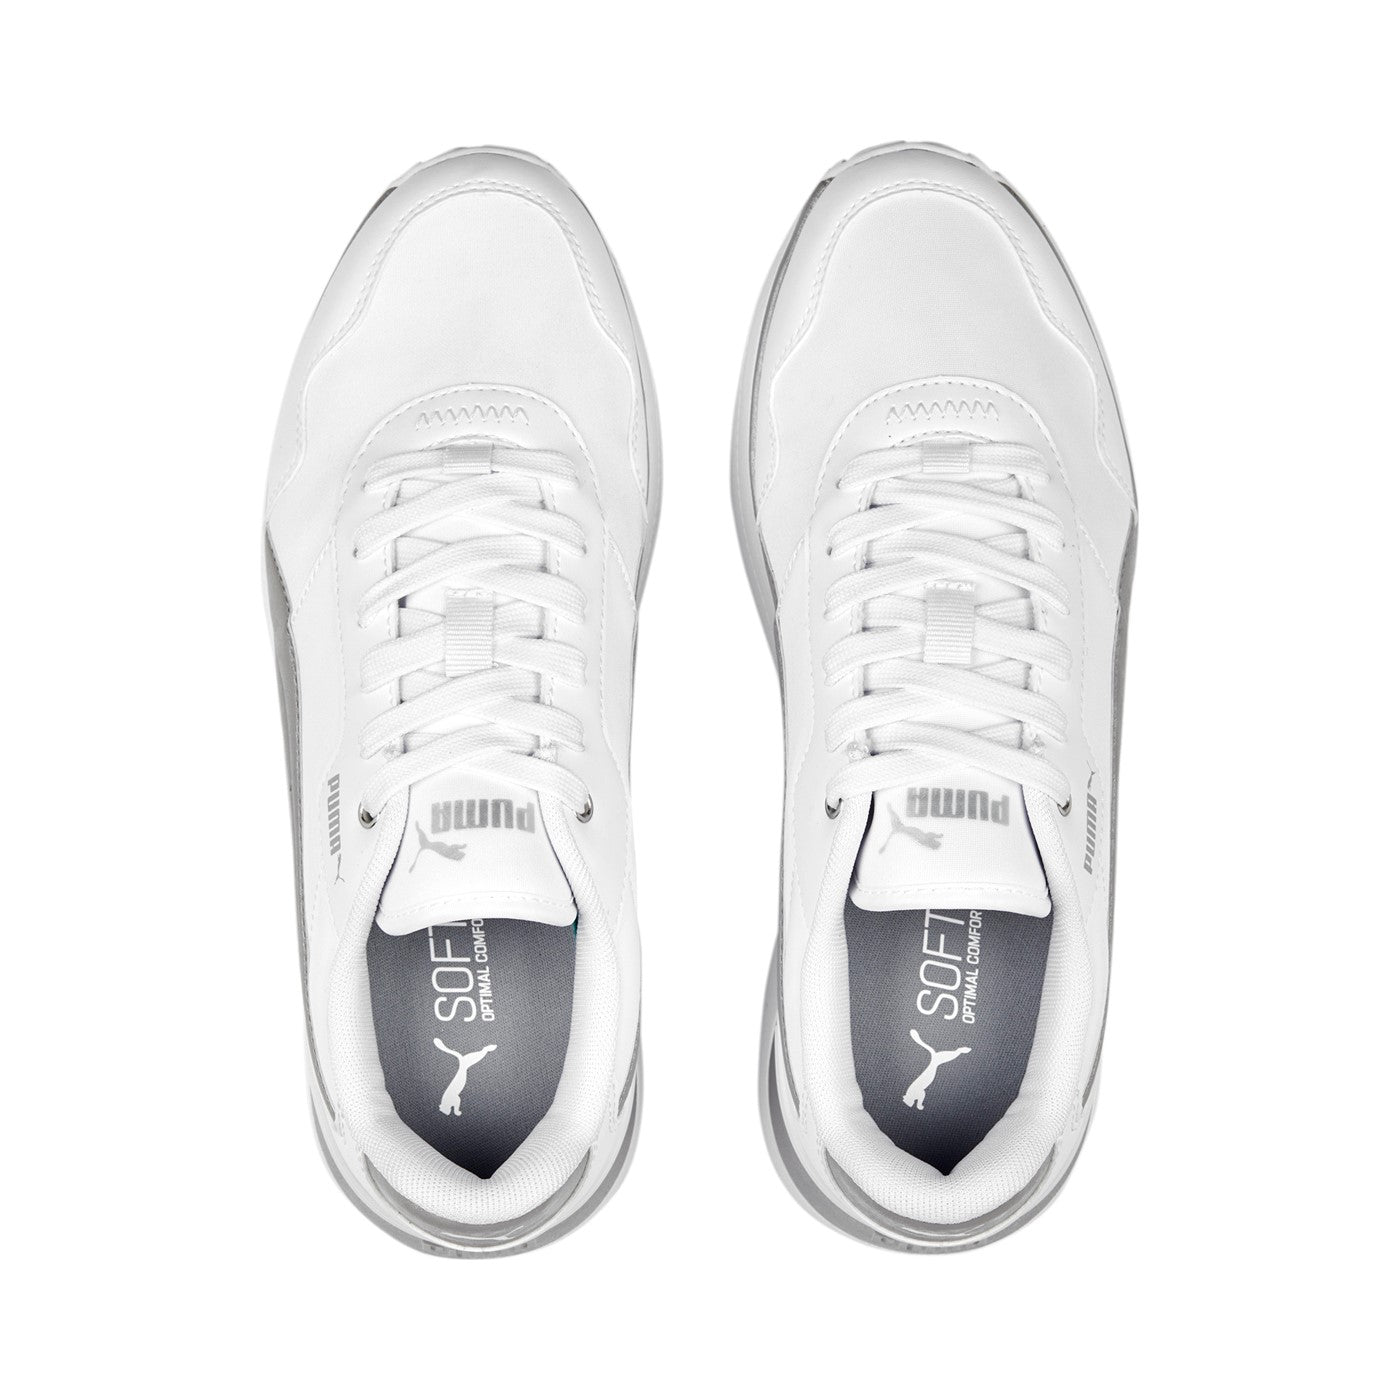 Puma scarpa sneakers da donna R78 Voyage Space Metallics 391130 02 bianco-argento